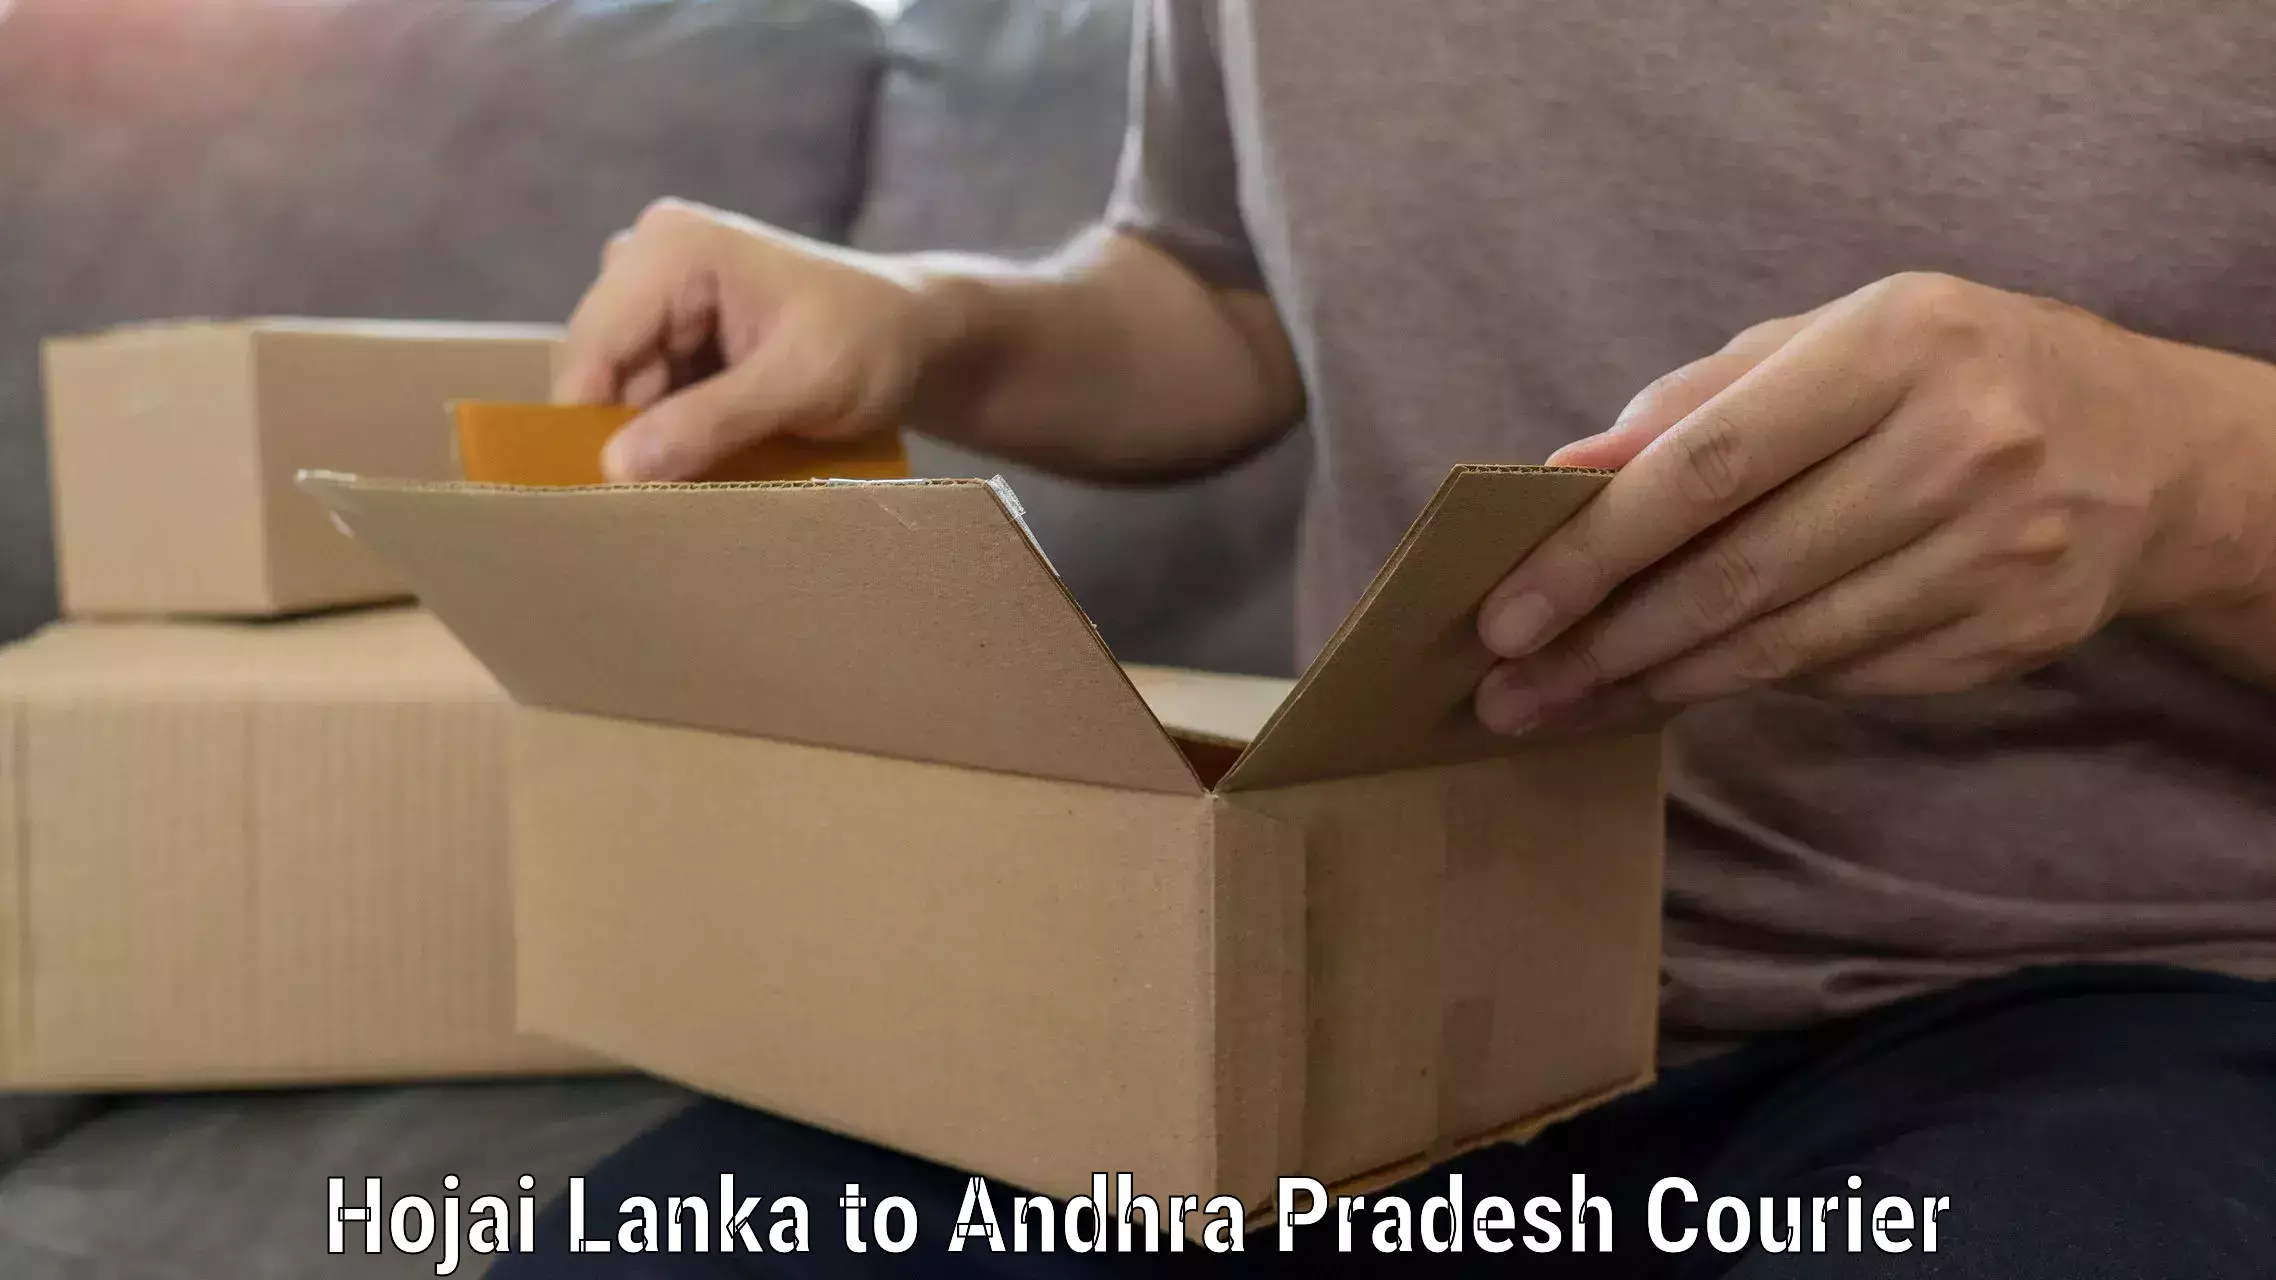 Moving and handling services Hojai Lanka to Andhra Pradesh